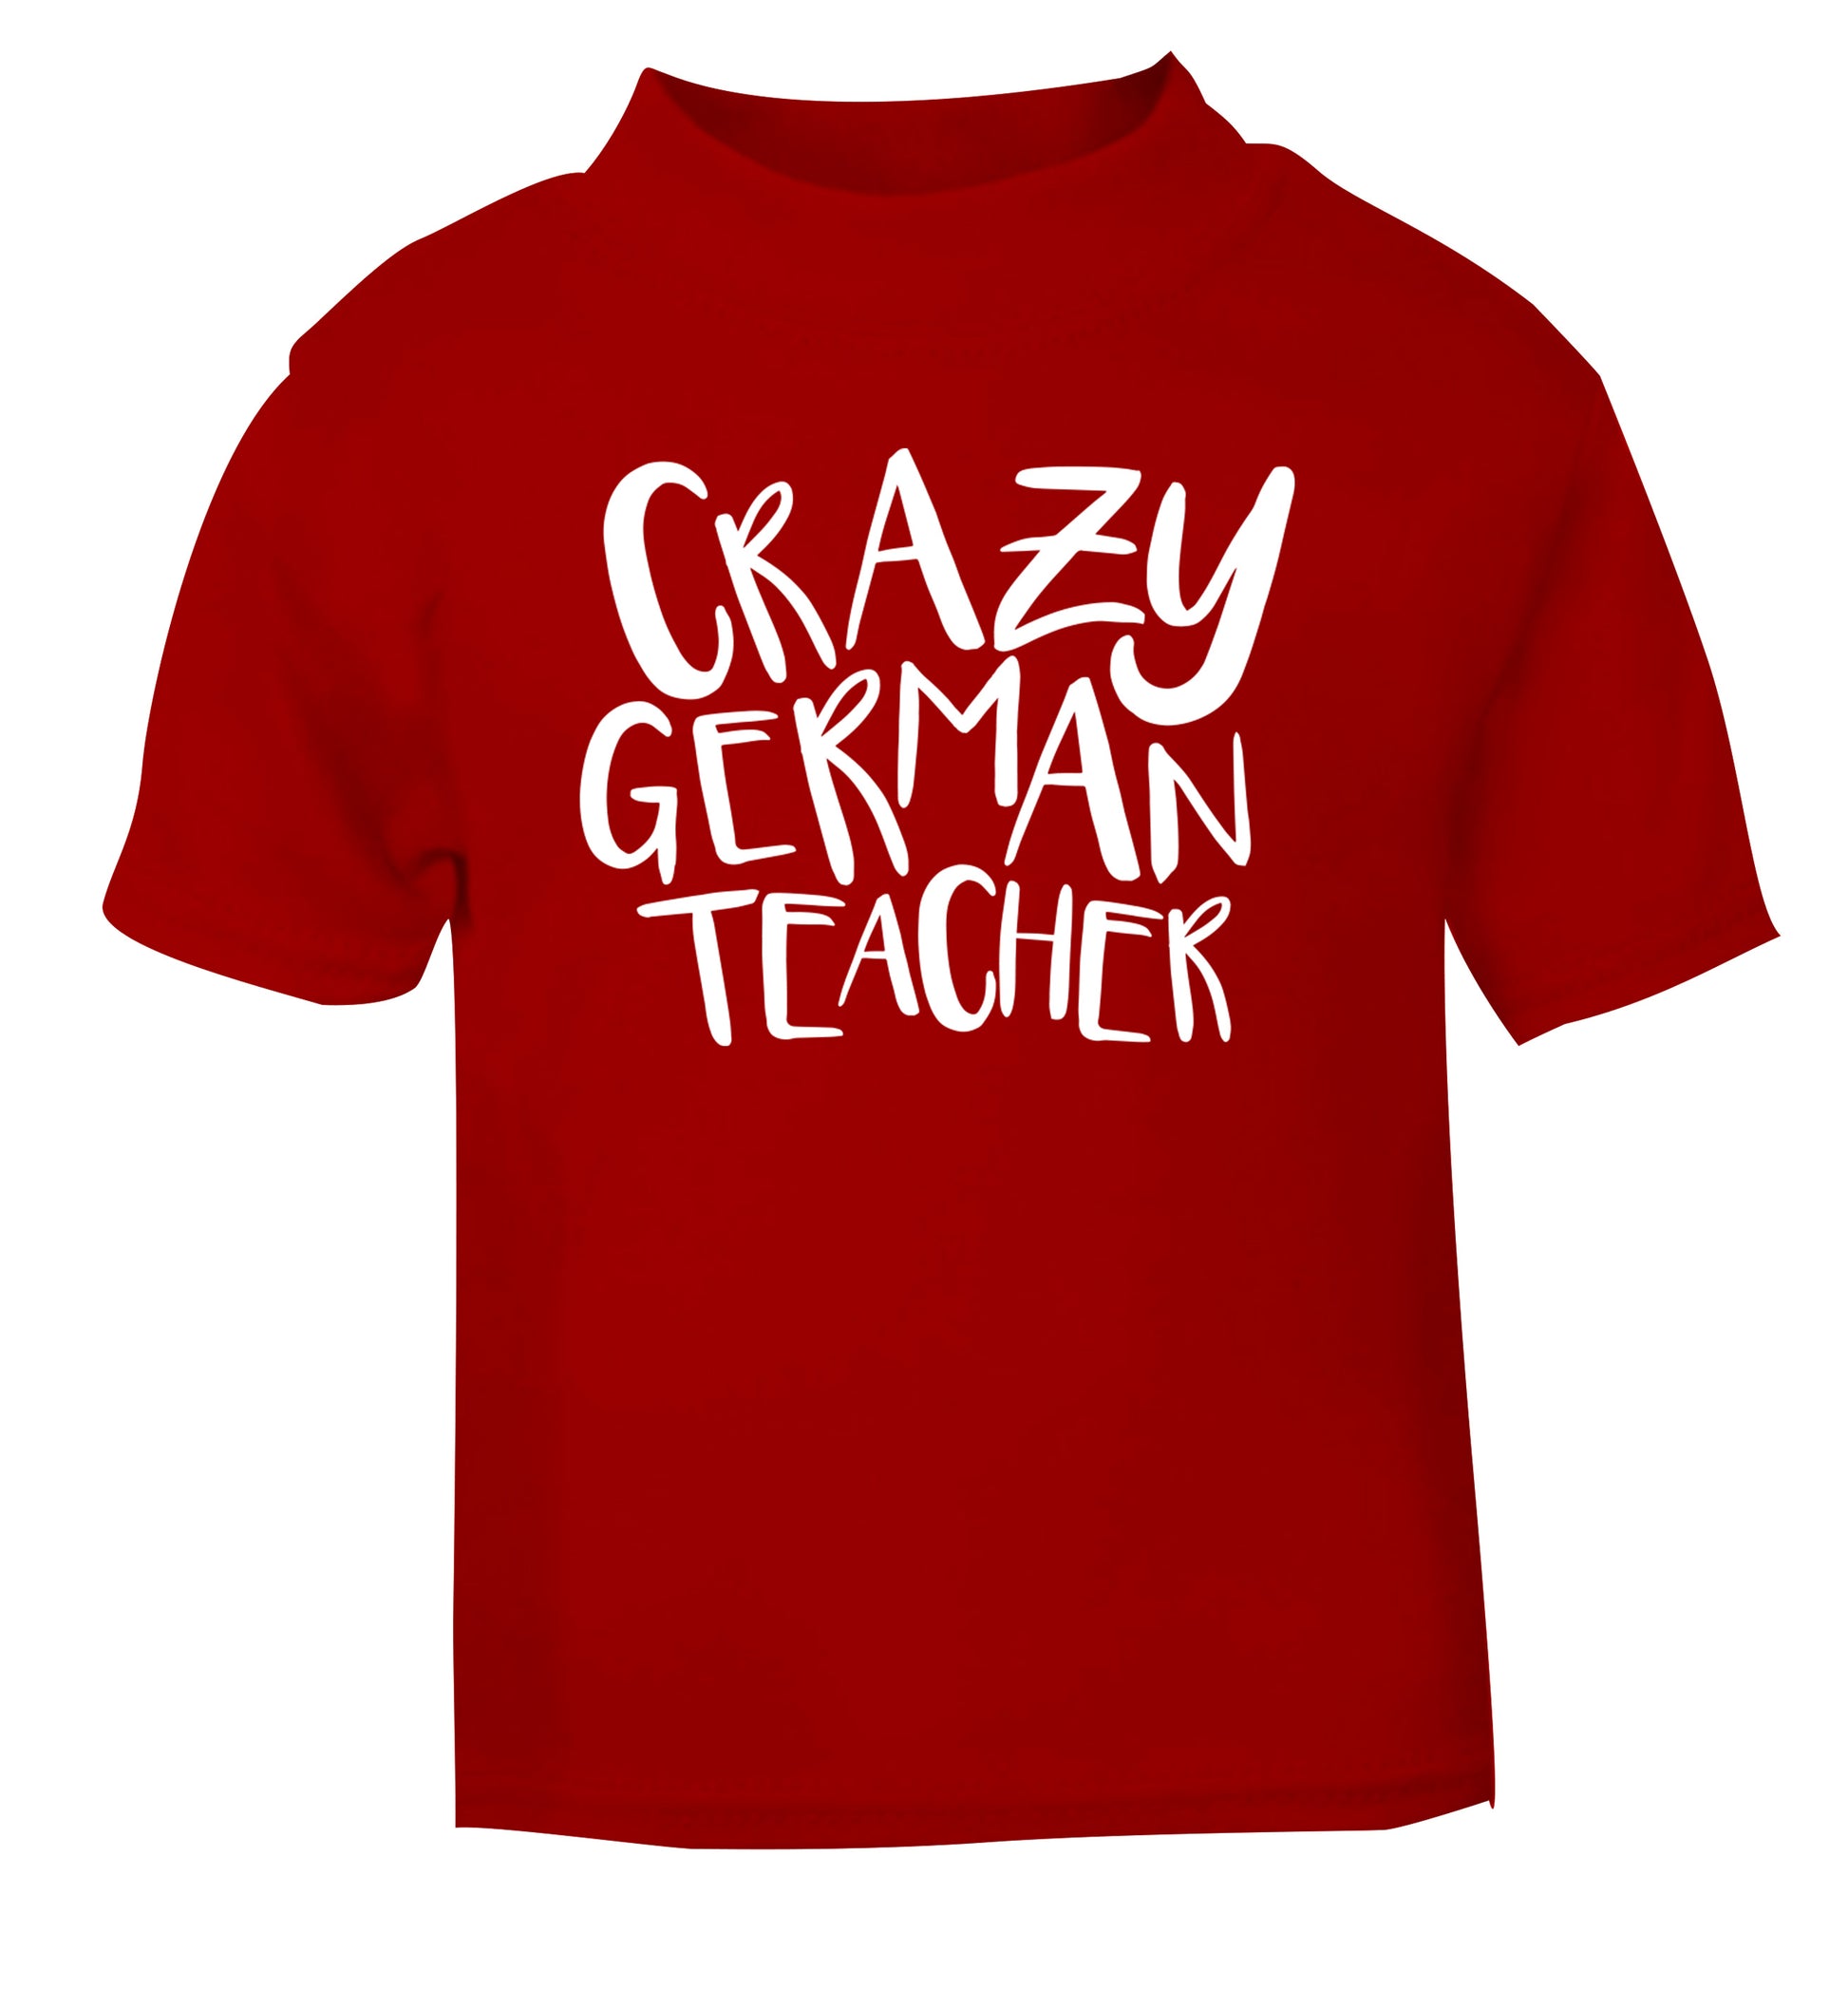 Crazy german teacher red Baby Toddler Tshirt 2 Years